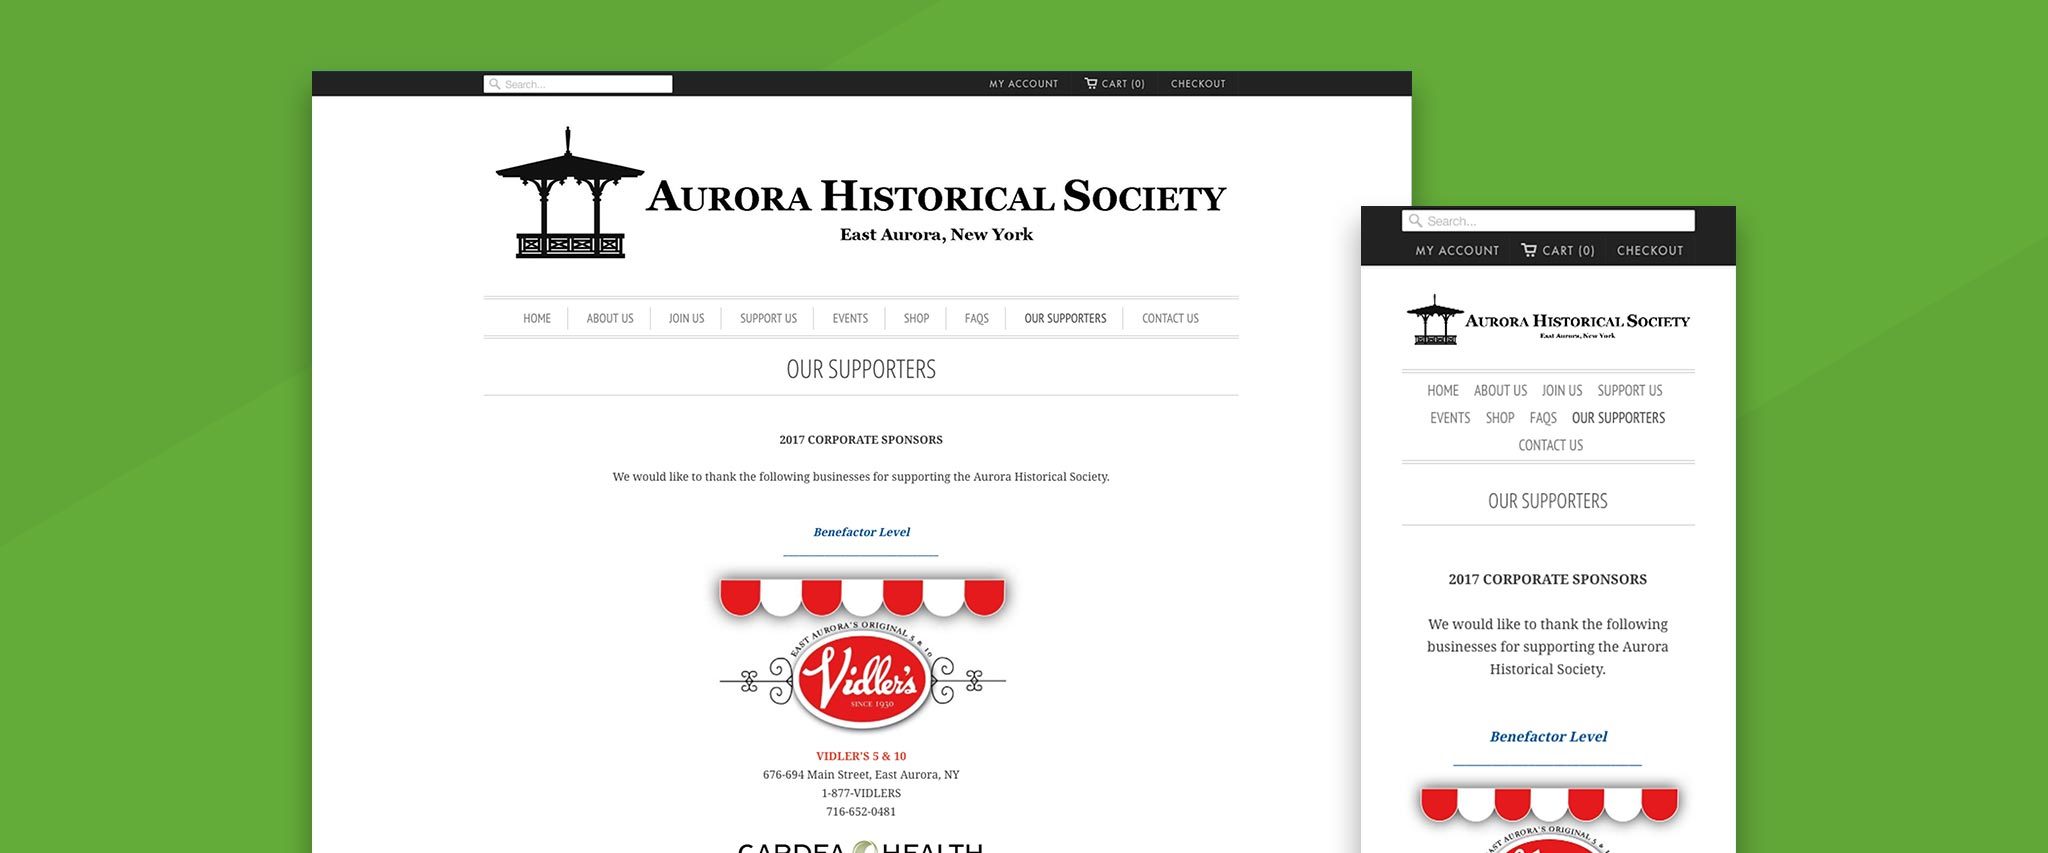 Aurora Historical Society Gallery